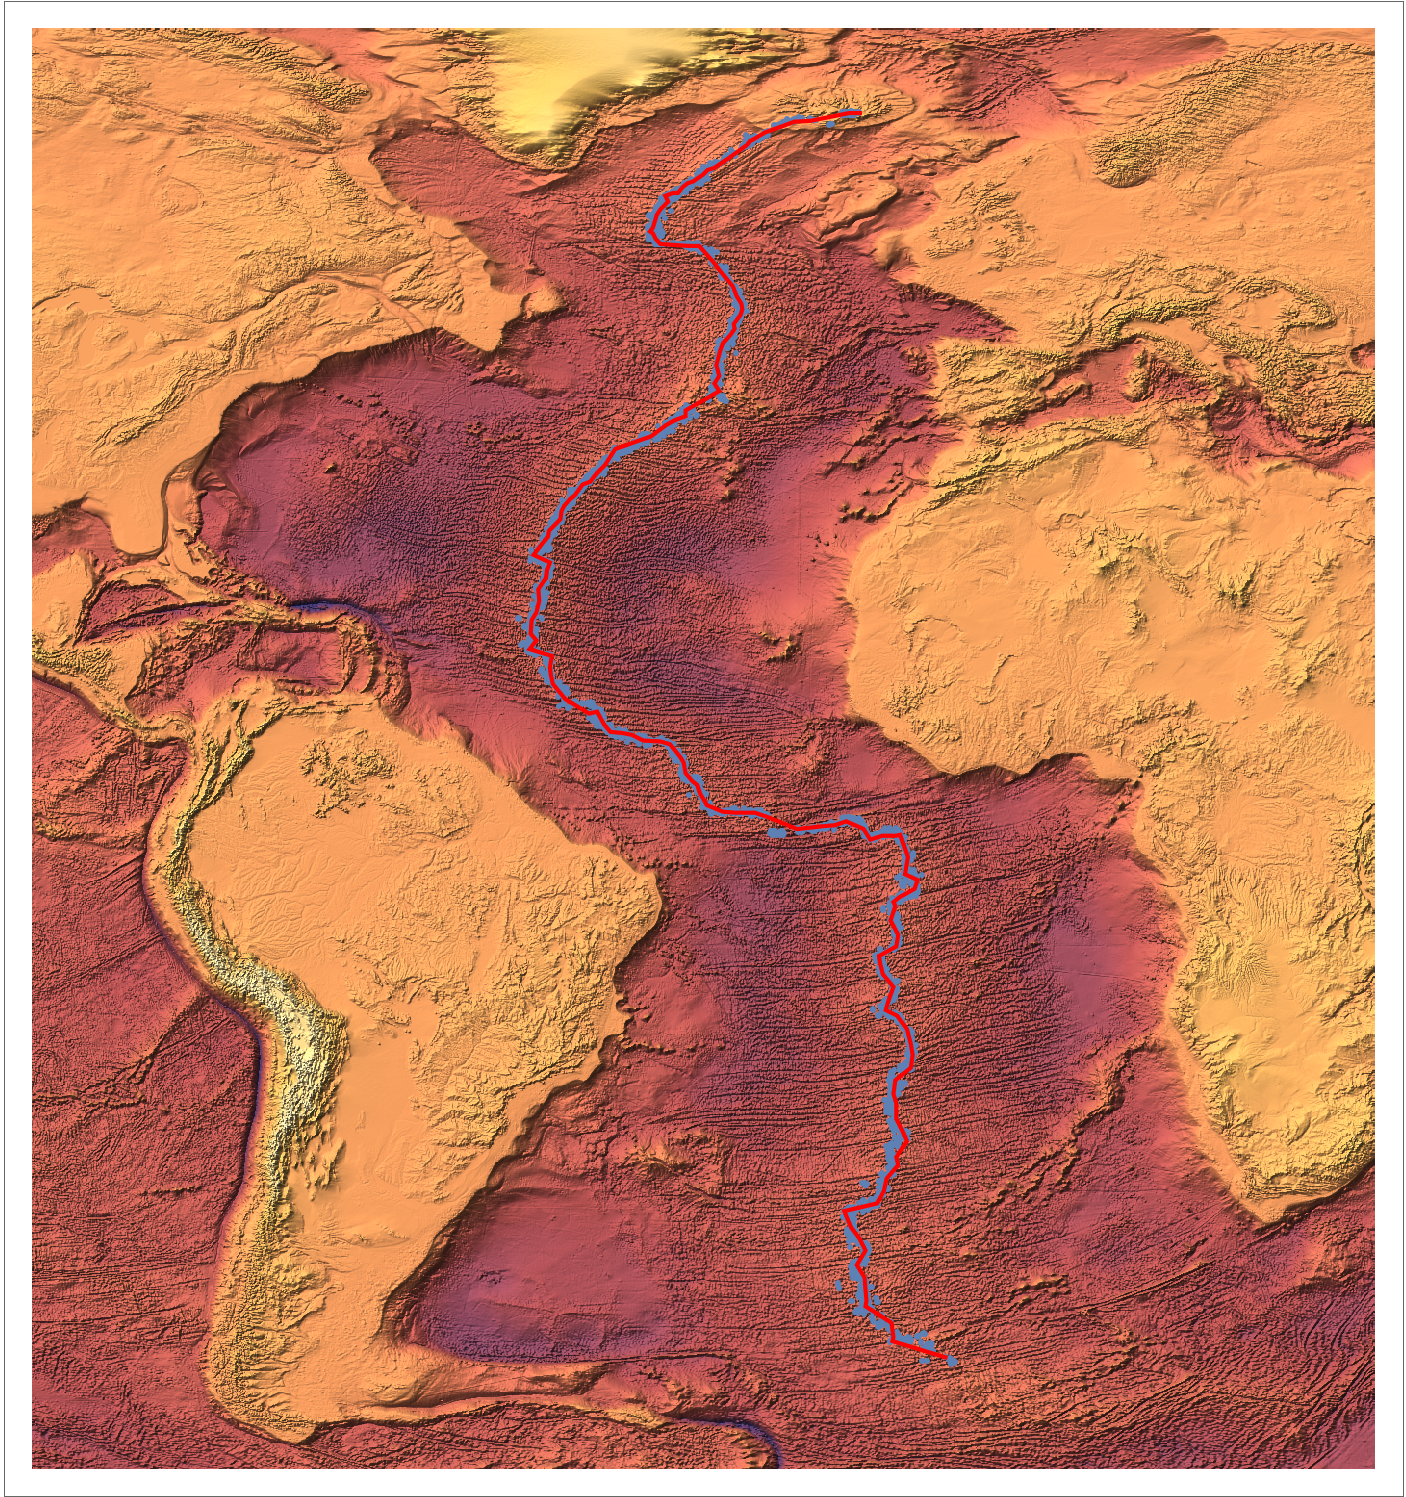 Model of the Mid-Atlantic Ridge via Bathymetric and Seismic Data